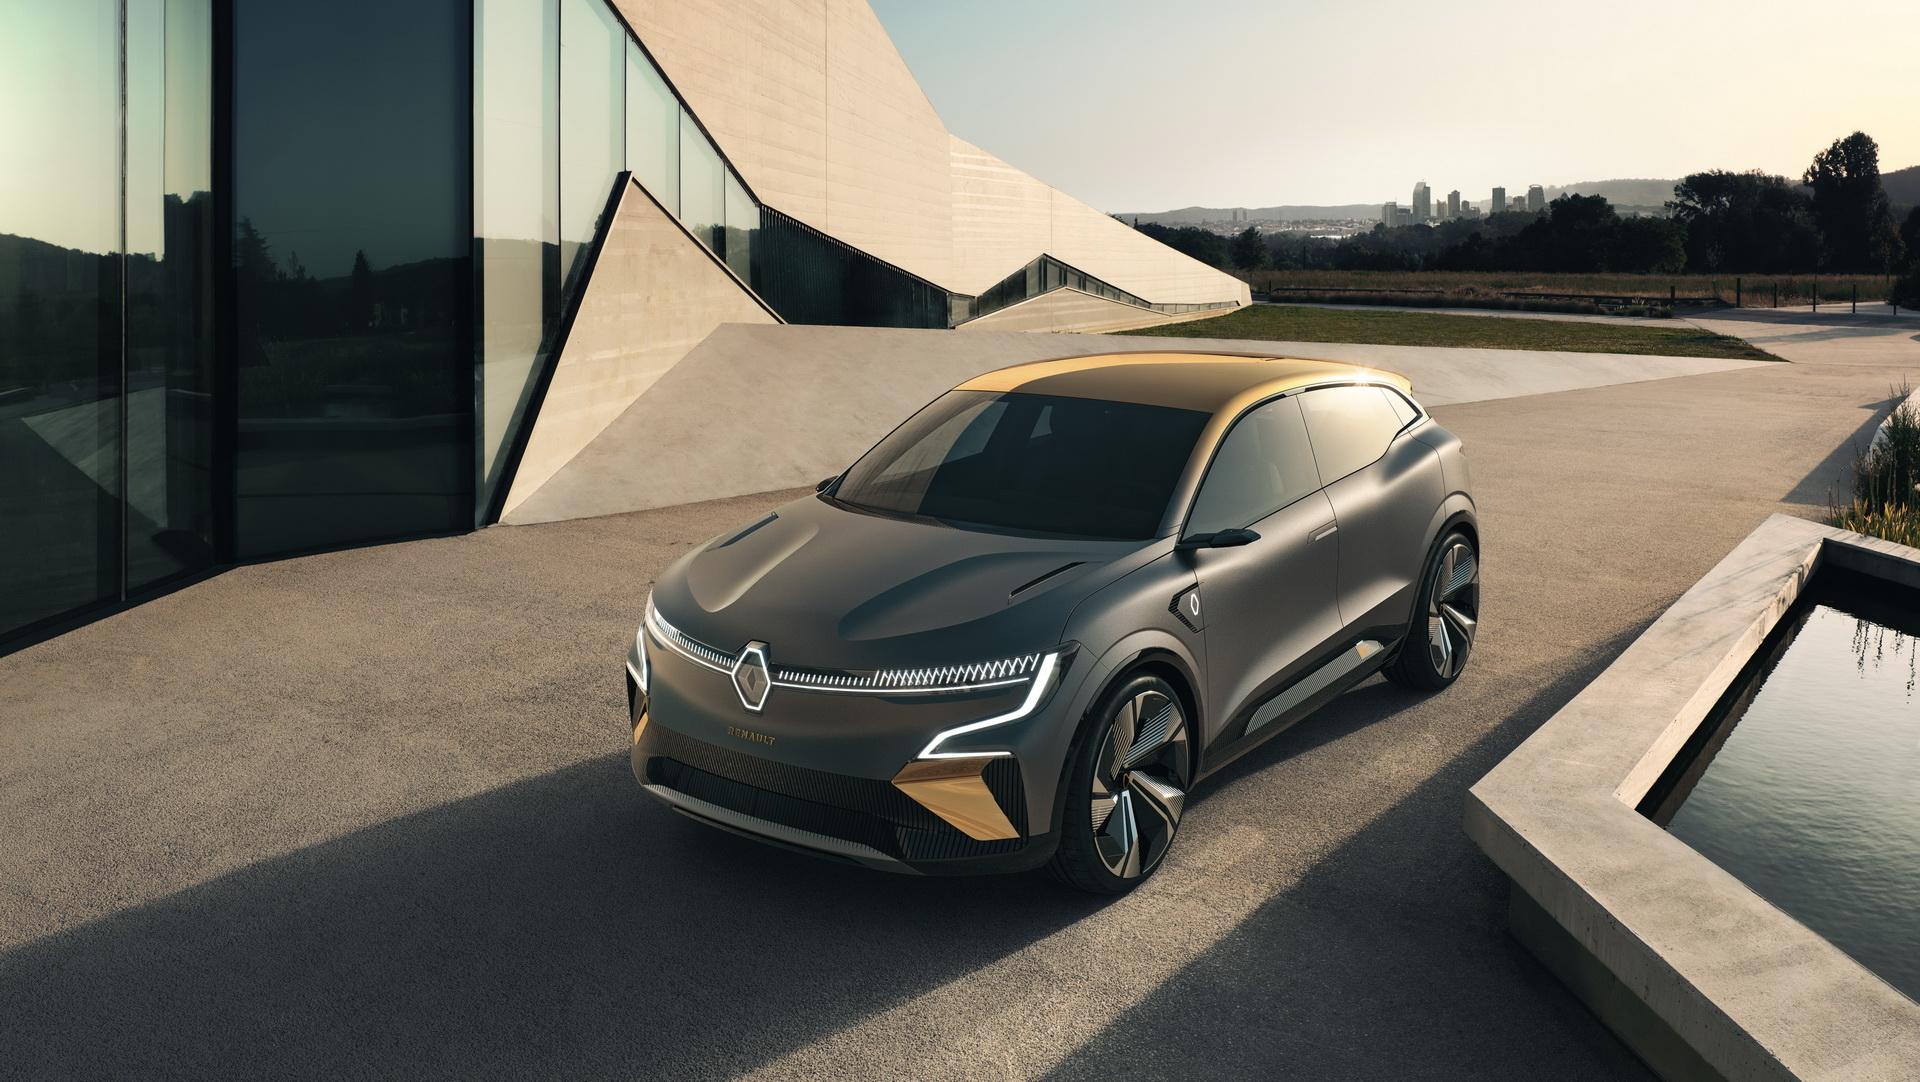 Auto Klub Ovako Renault vidi budućnost kompaktne klase